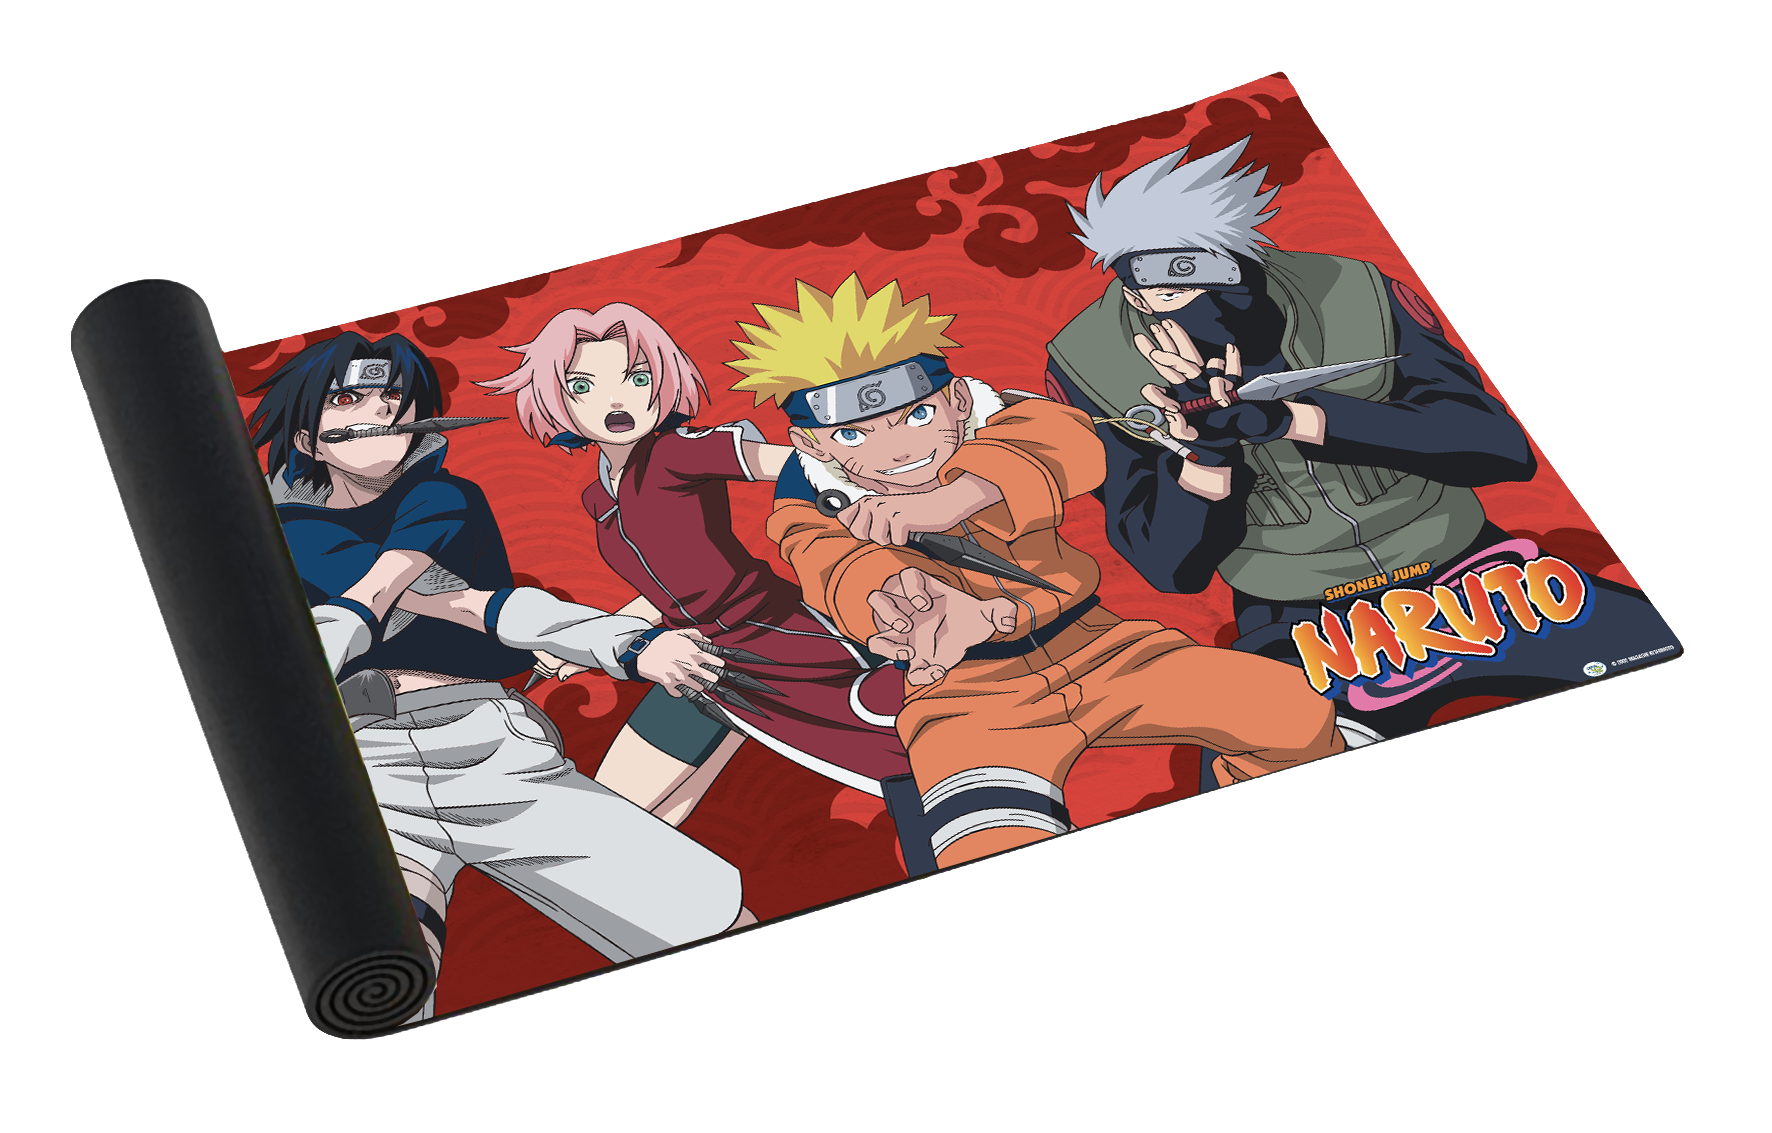 Officially Licensed Naruto Standard Playmat - Kakashi Team 